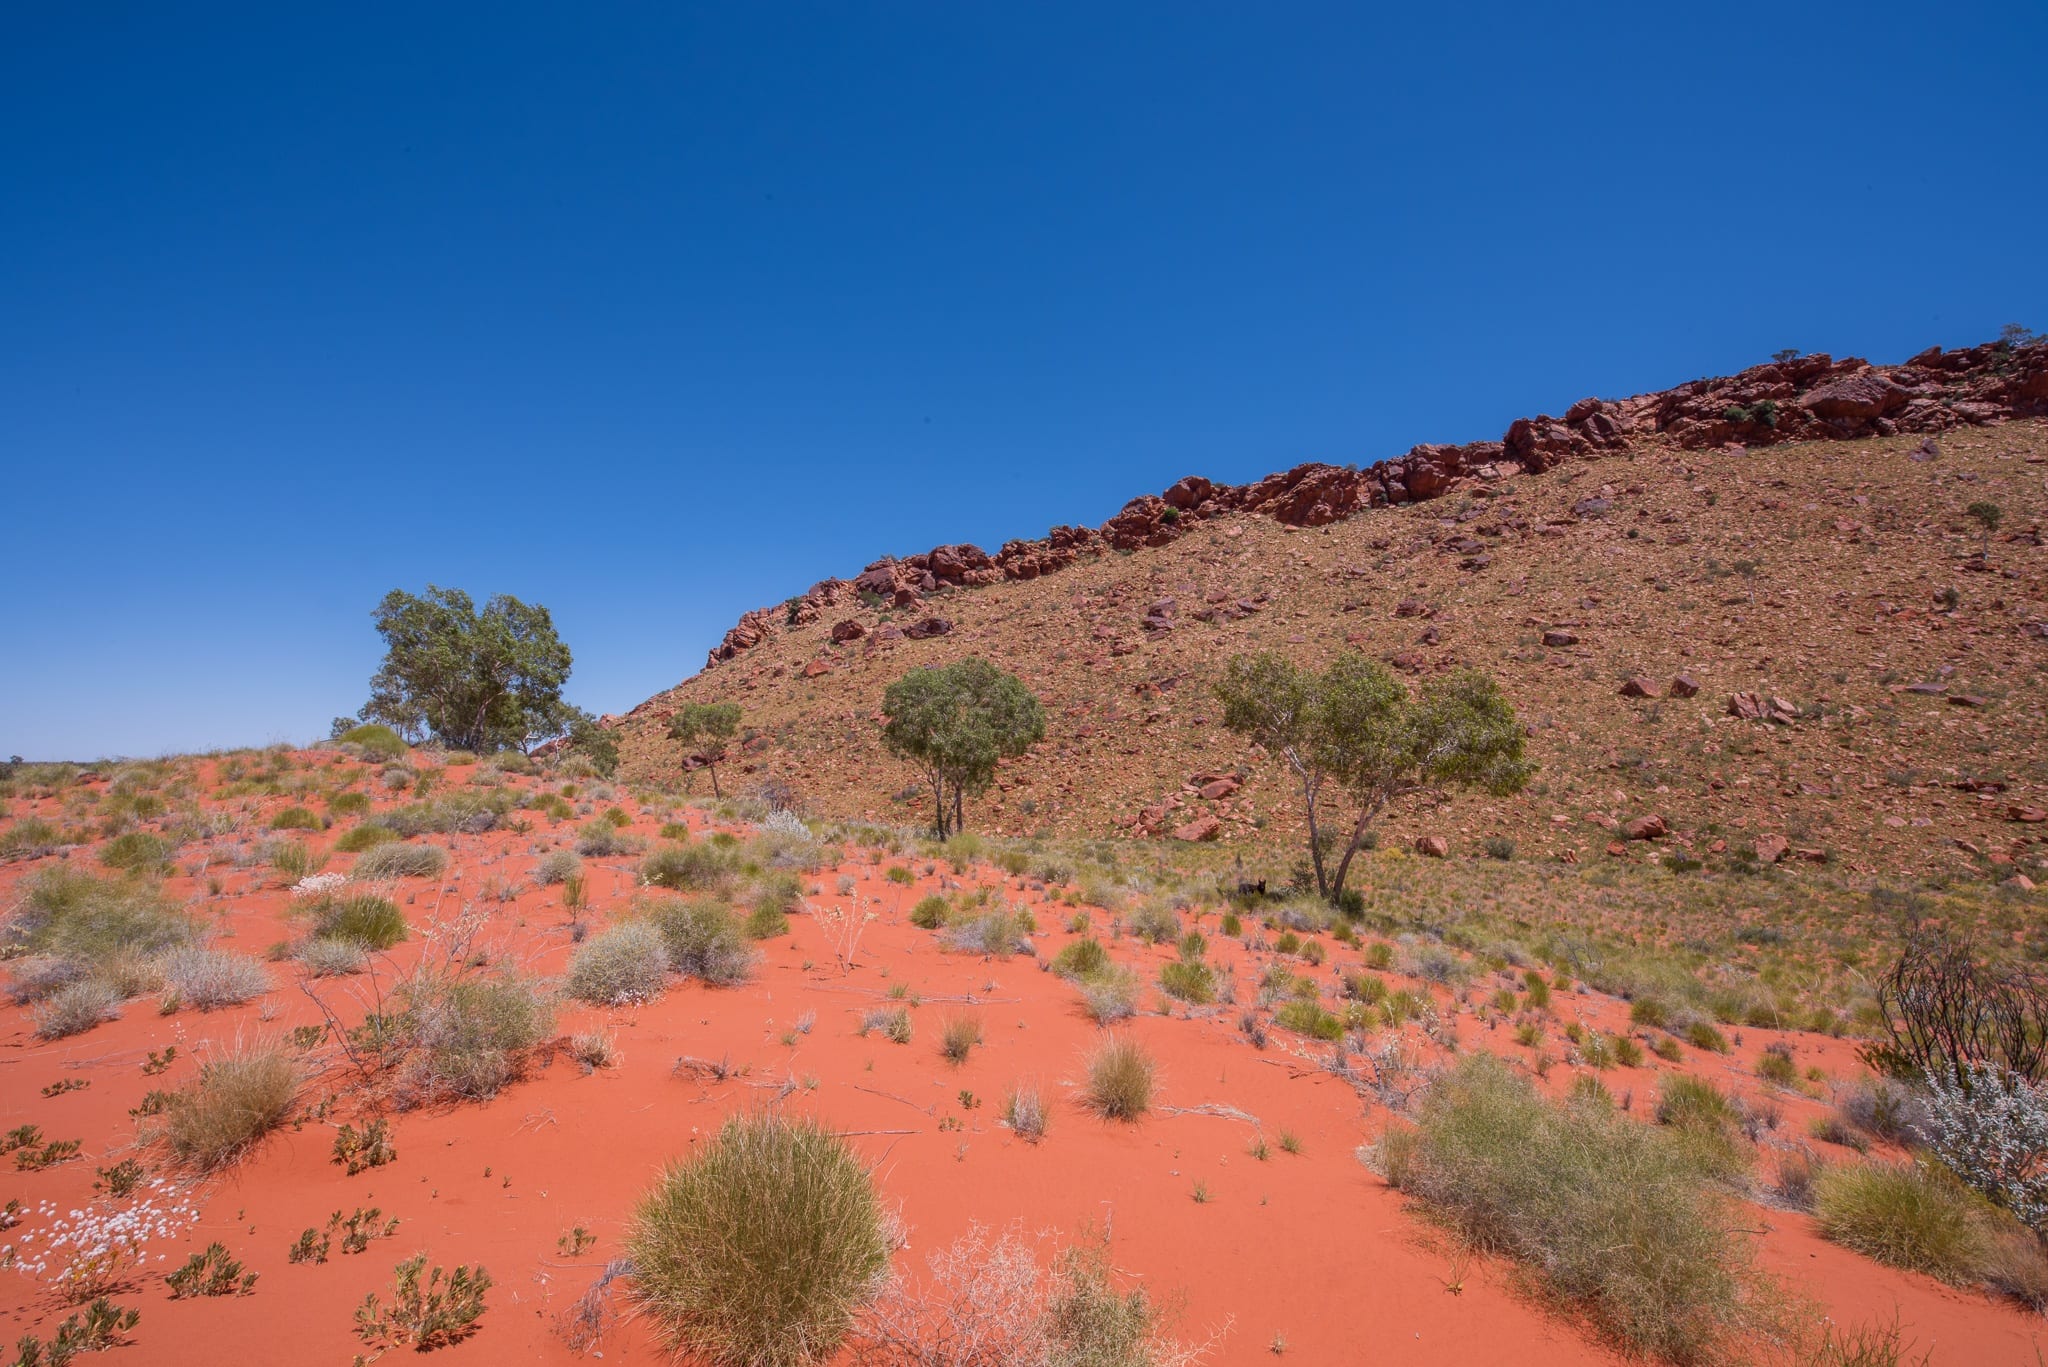 Пустыня гибсона австралия. Пустыни и полупустыни Австралии. Буш полупустыни Австралии. Пустыня Гибсон в Австралии.